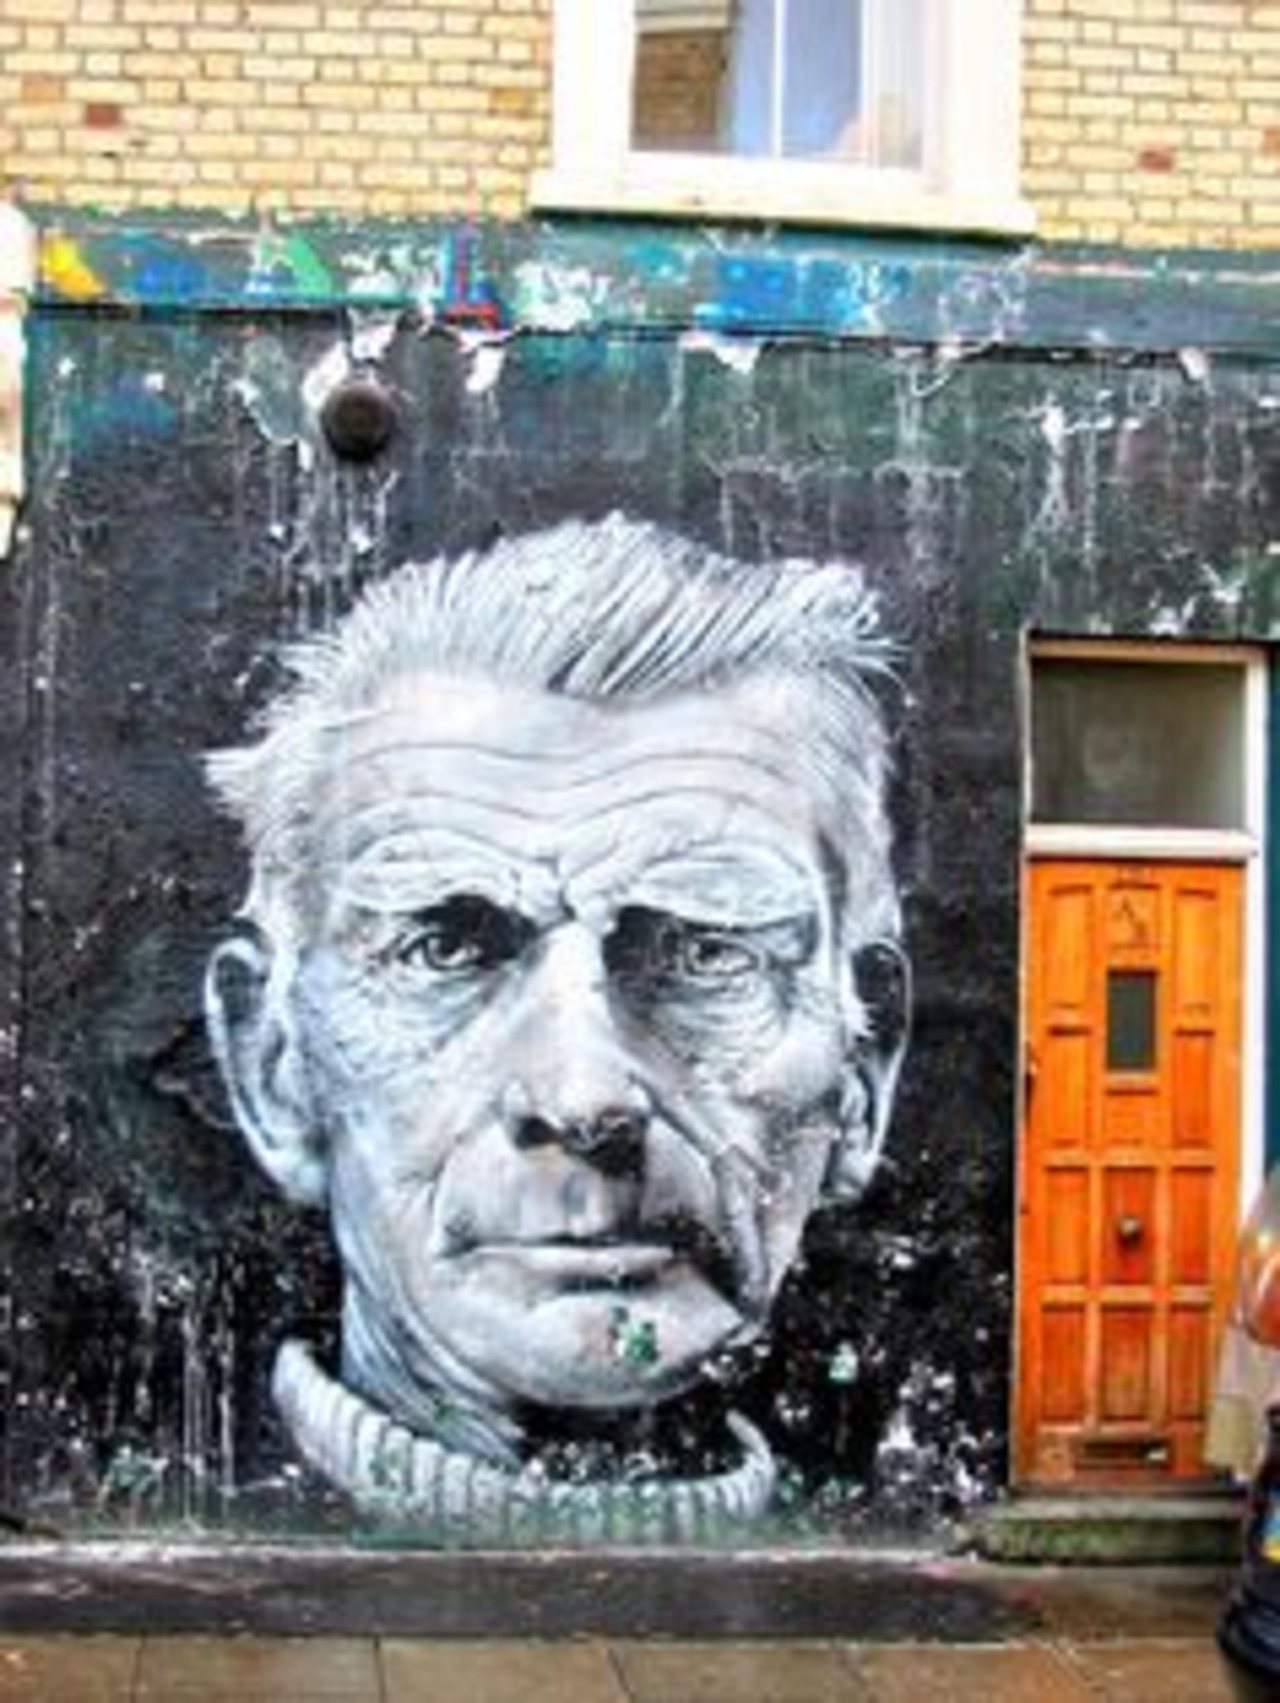 Don't forget to take a walk down Camden Town for some amazing street art Samuel Beckett #streetart #London #graffiti http://t.co/rauHxd0Q7S